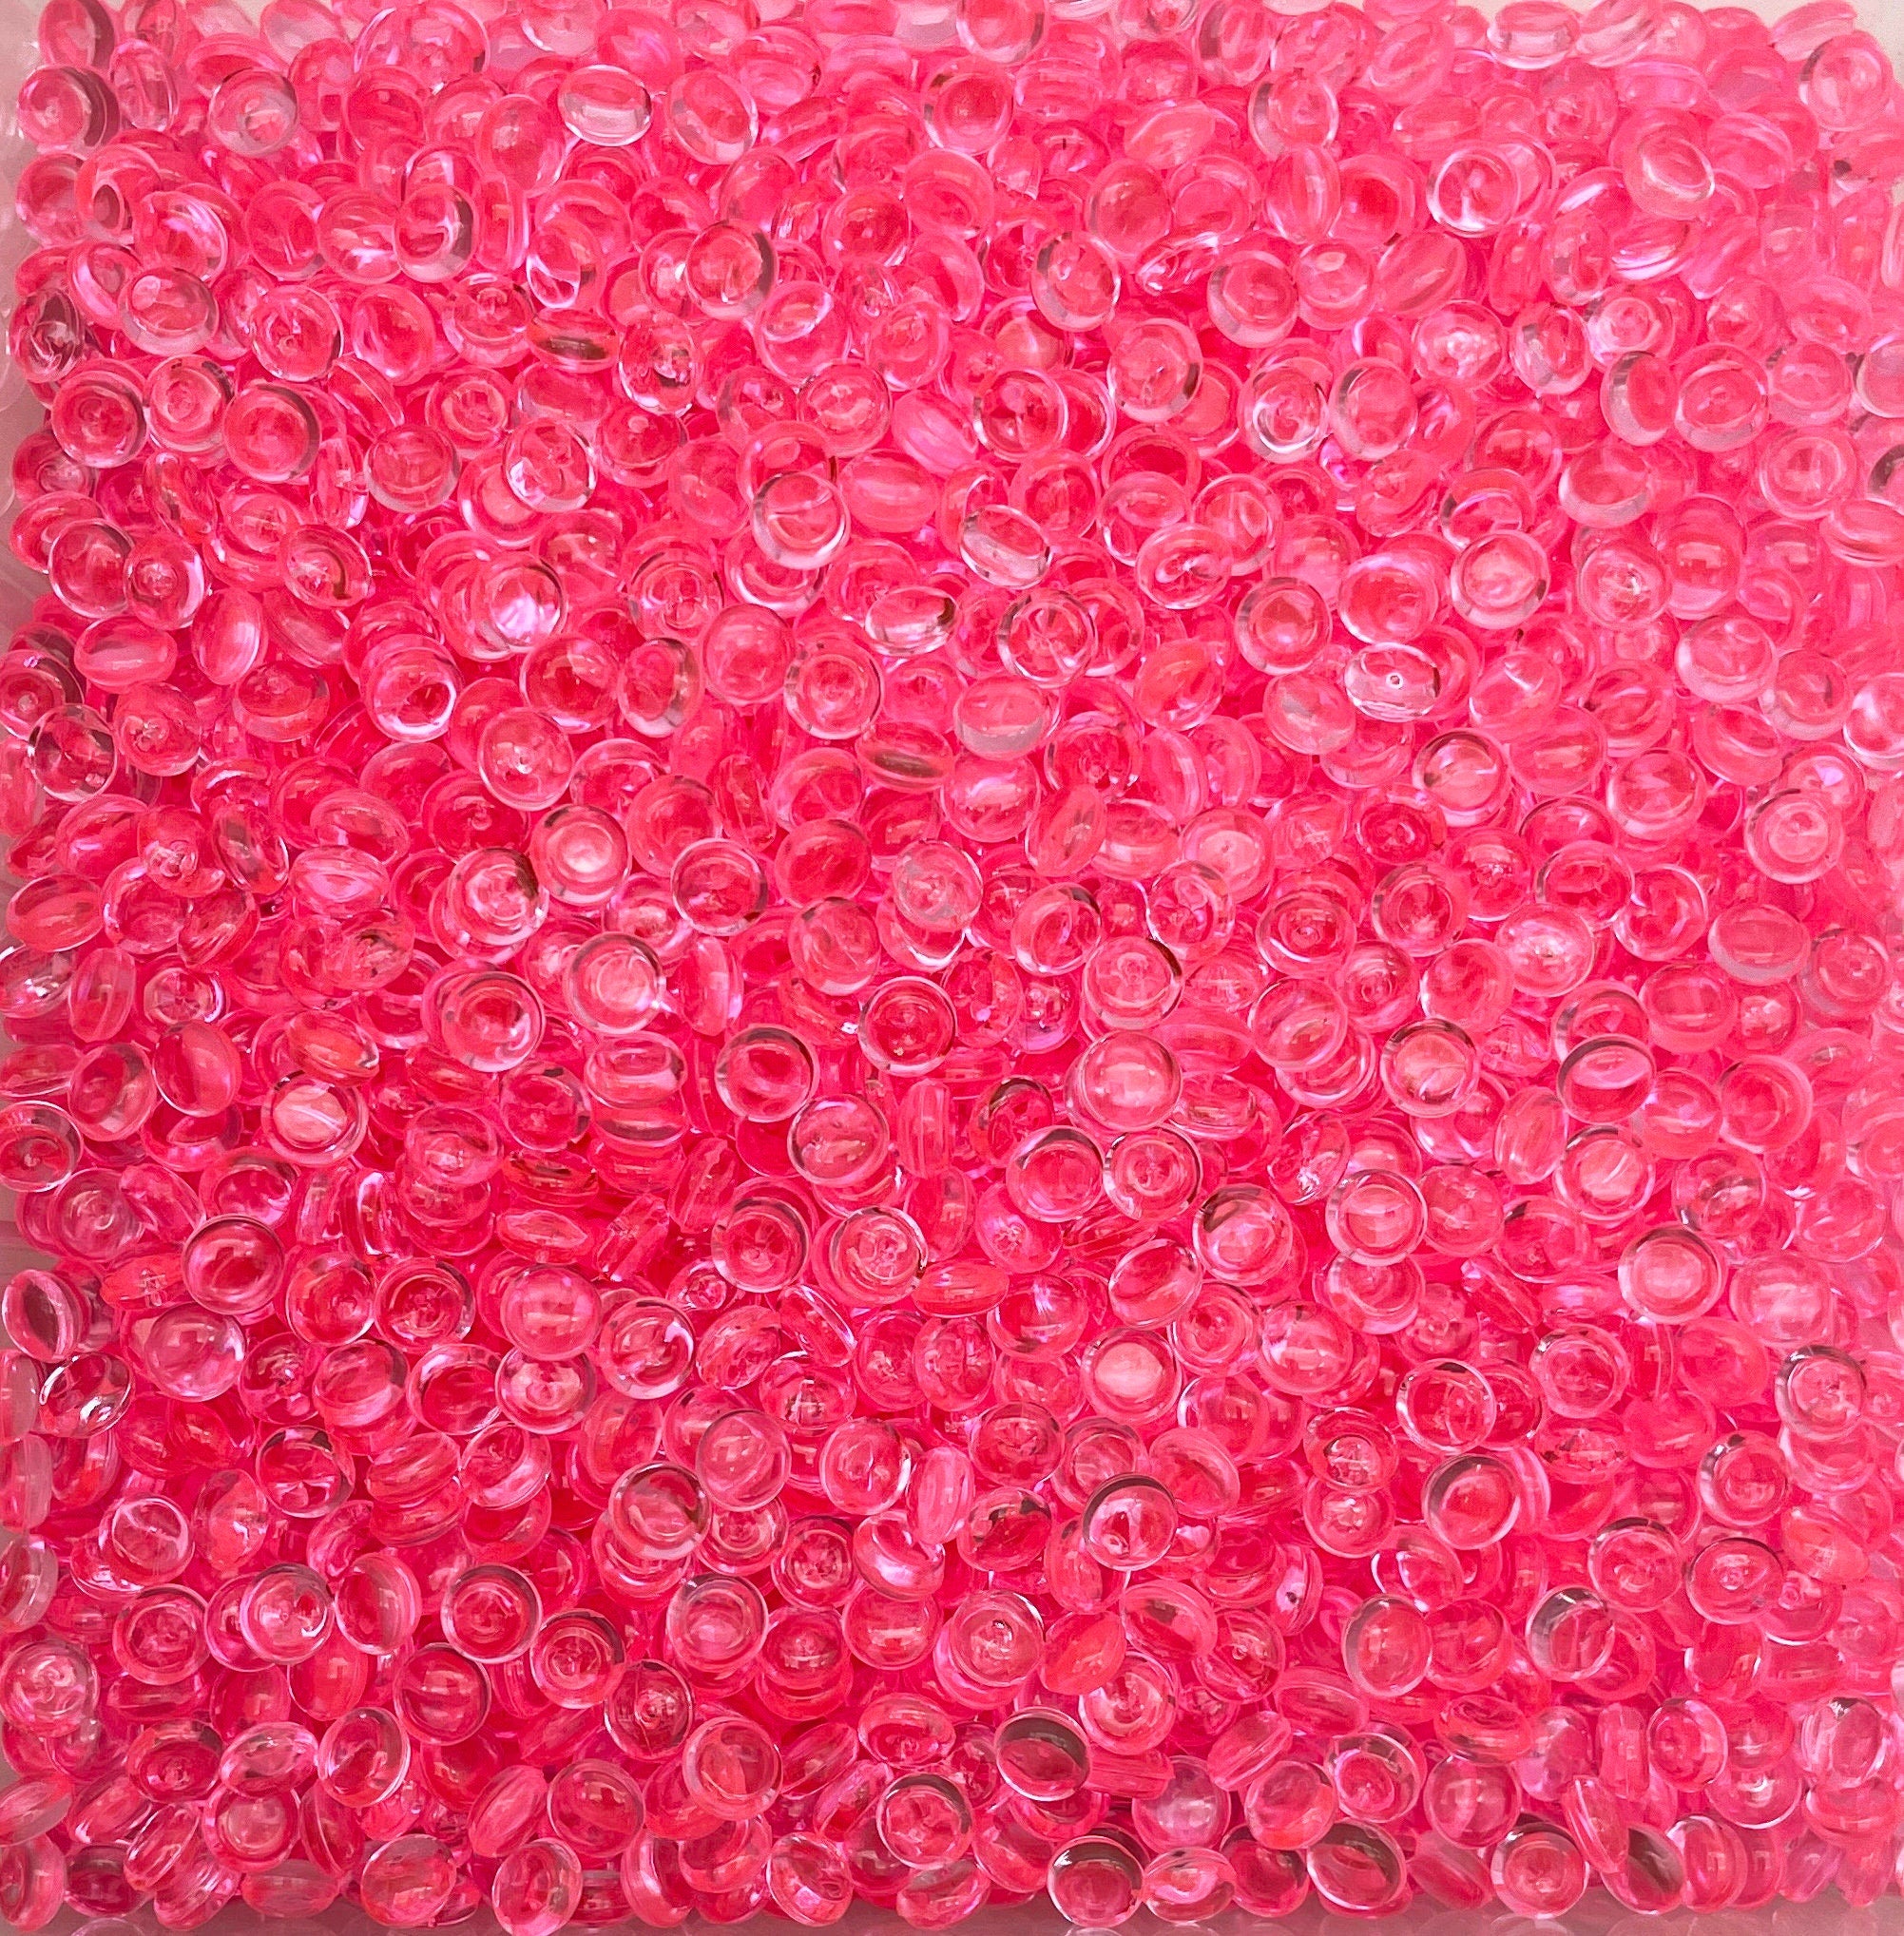 100g Pink Fishbowl Beads, Beads for Crunchy Slime, Slushie Beads for Slime,  Slime Supplies 